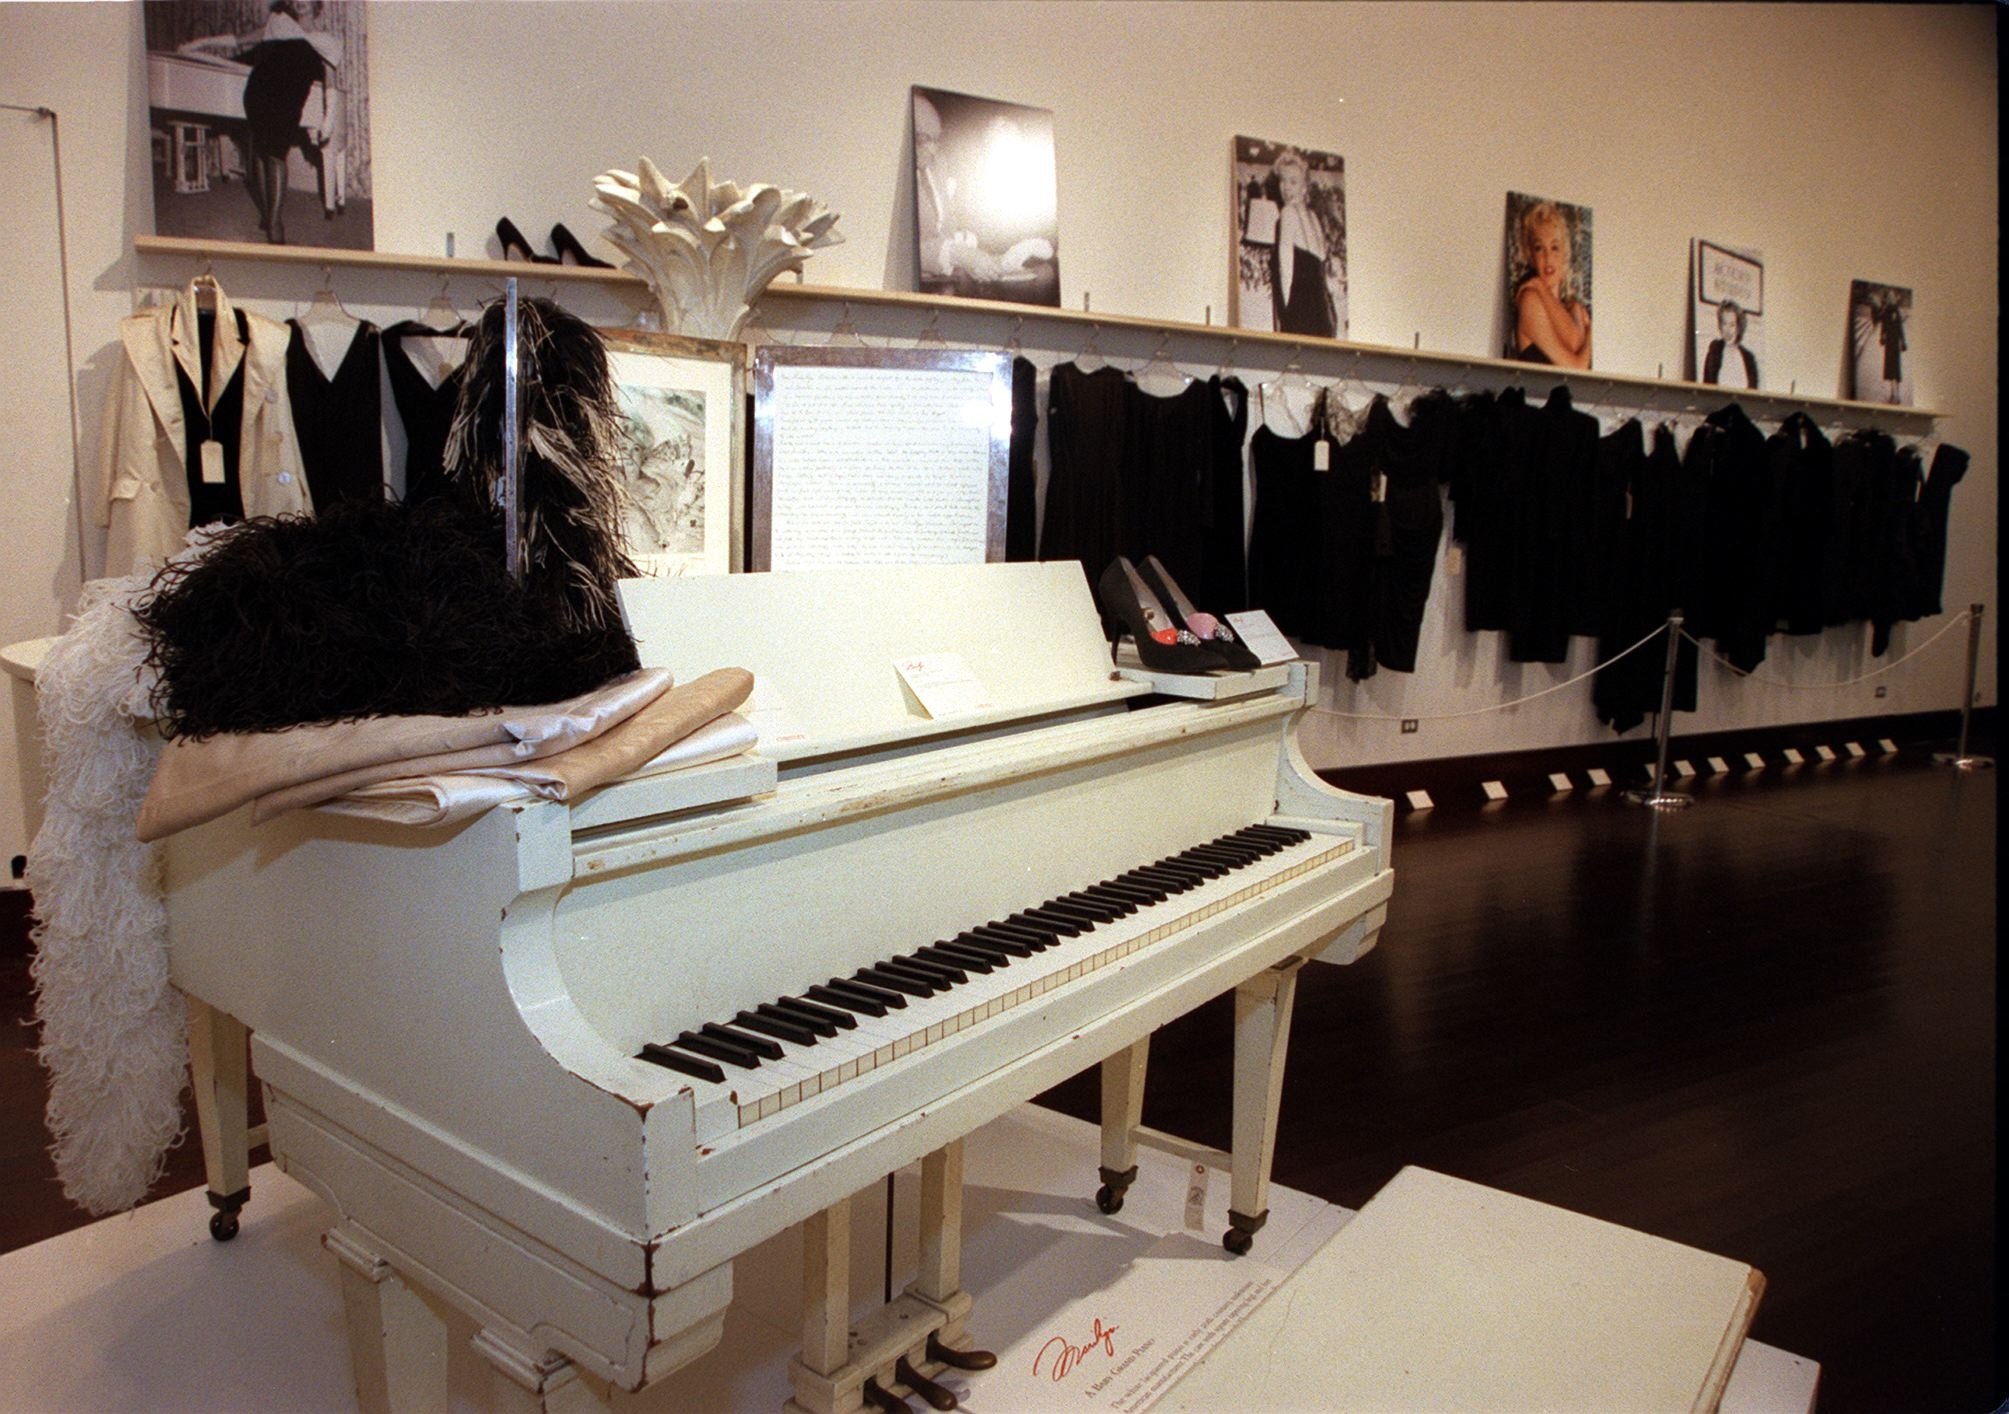 Marilyn Monroe's baby grand piano